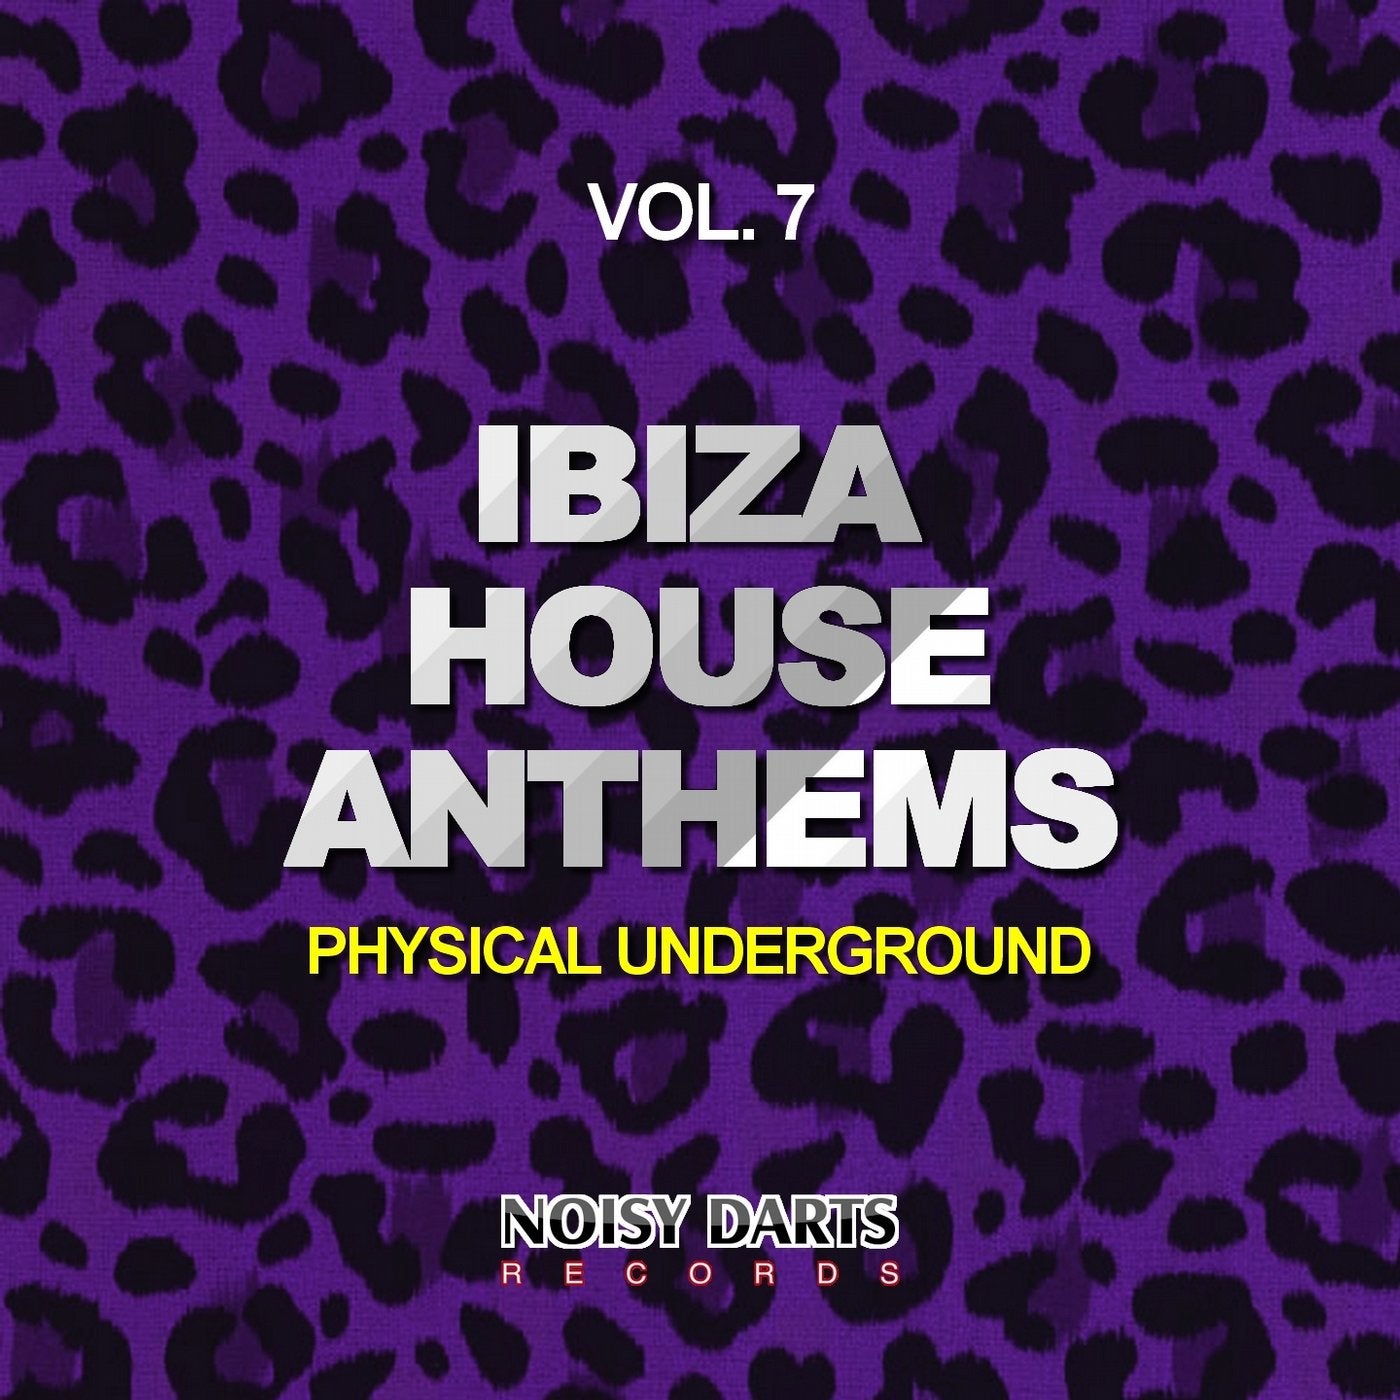 Ibiza House Anthems, Vol. 7 (Physical Underground)